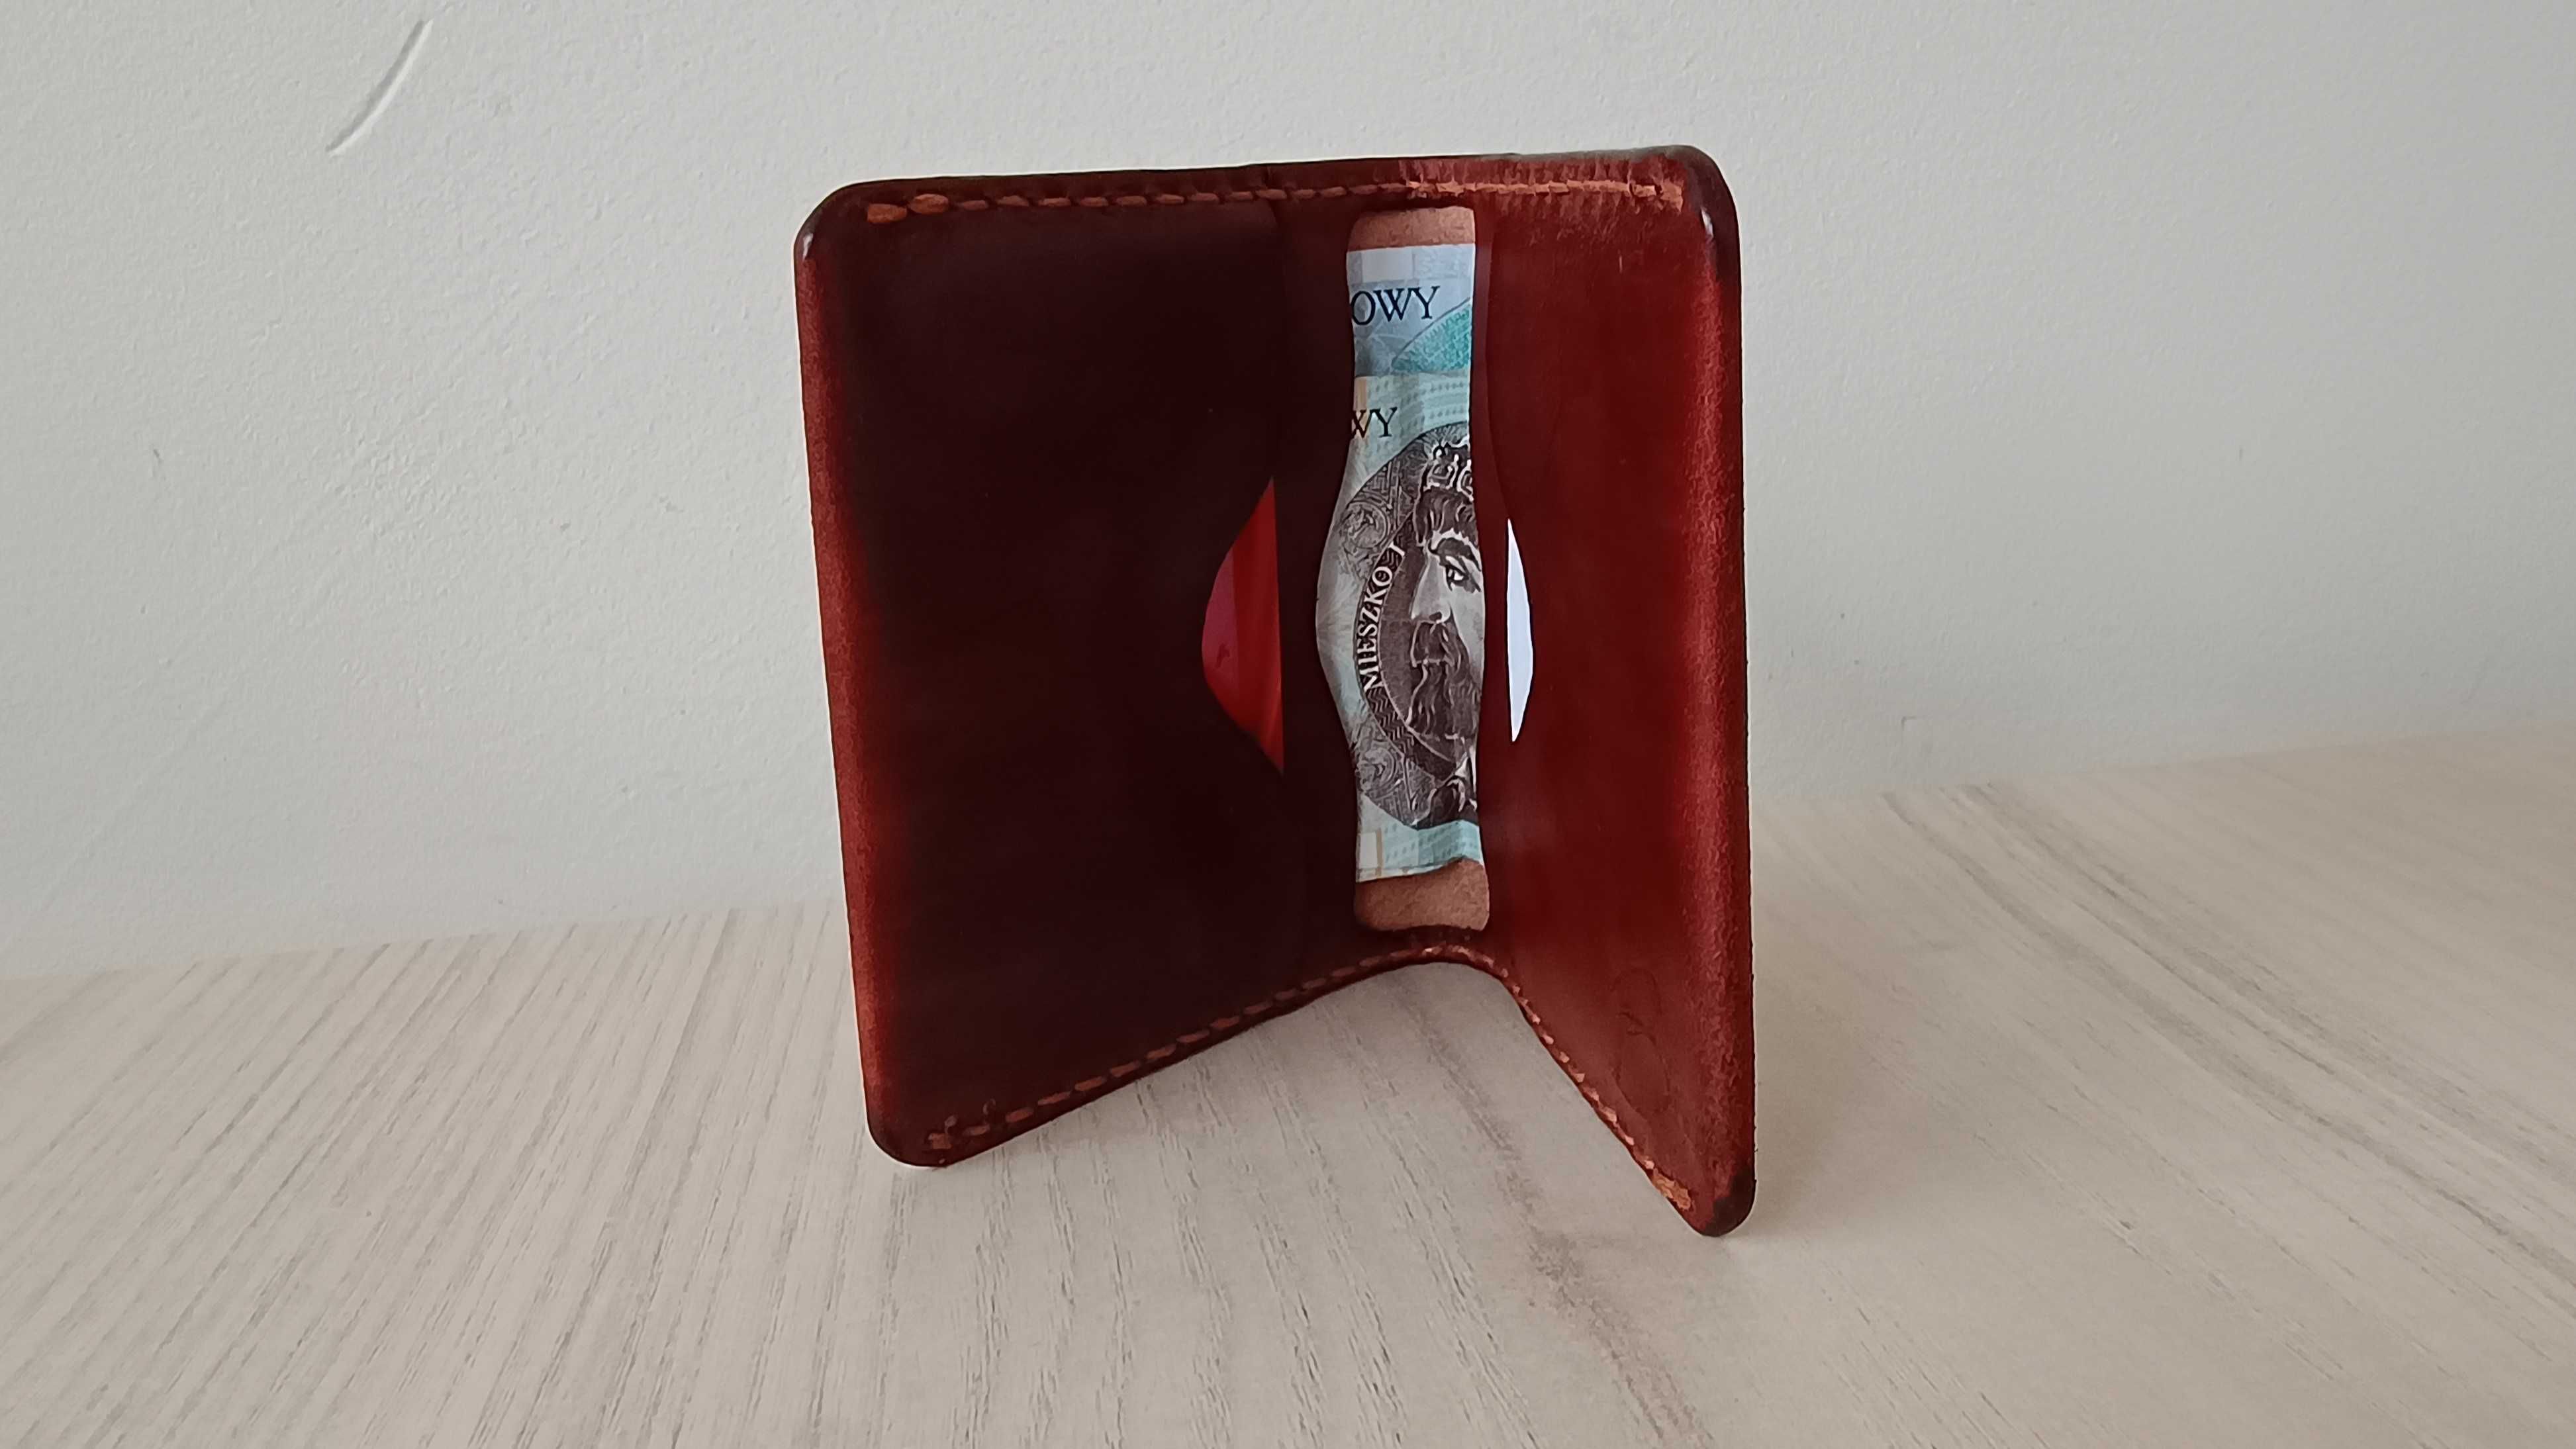 Borubar Skóroszyj - EDC - składany portfel mini bifold